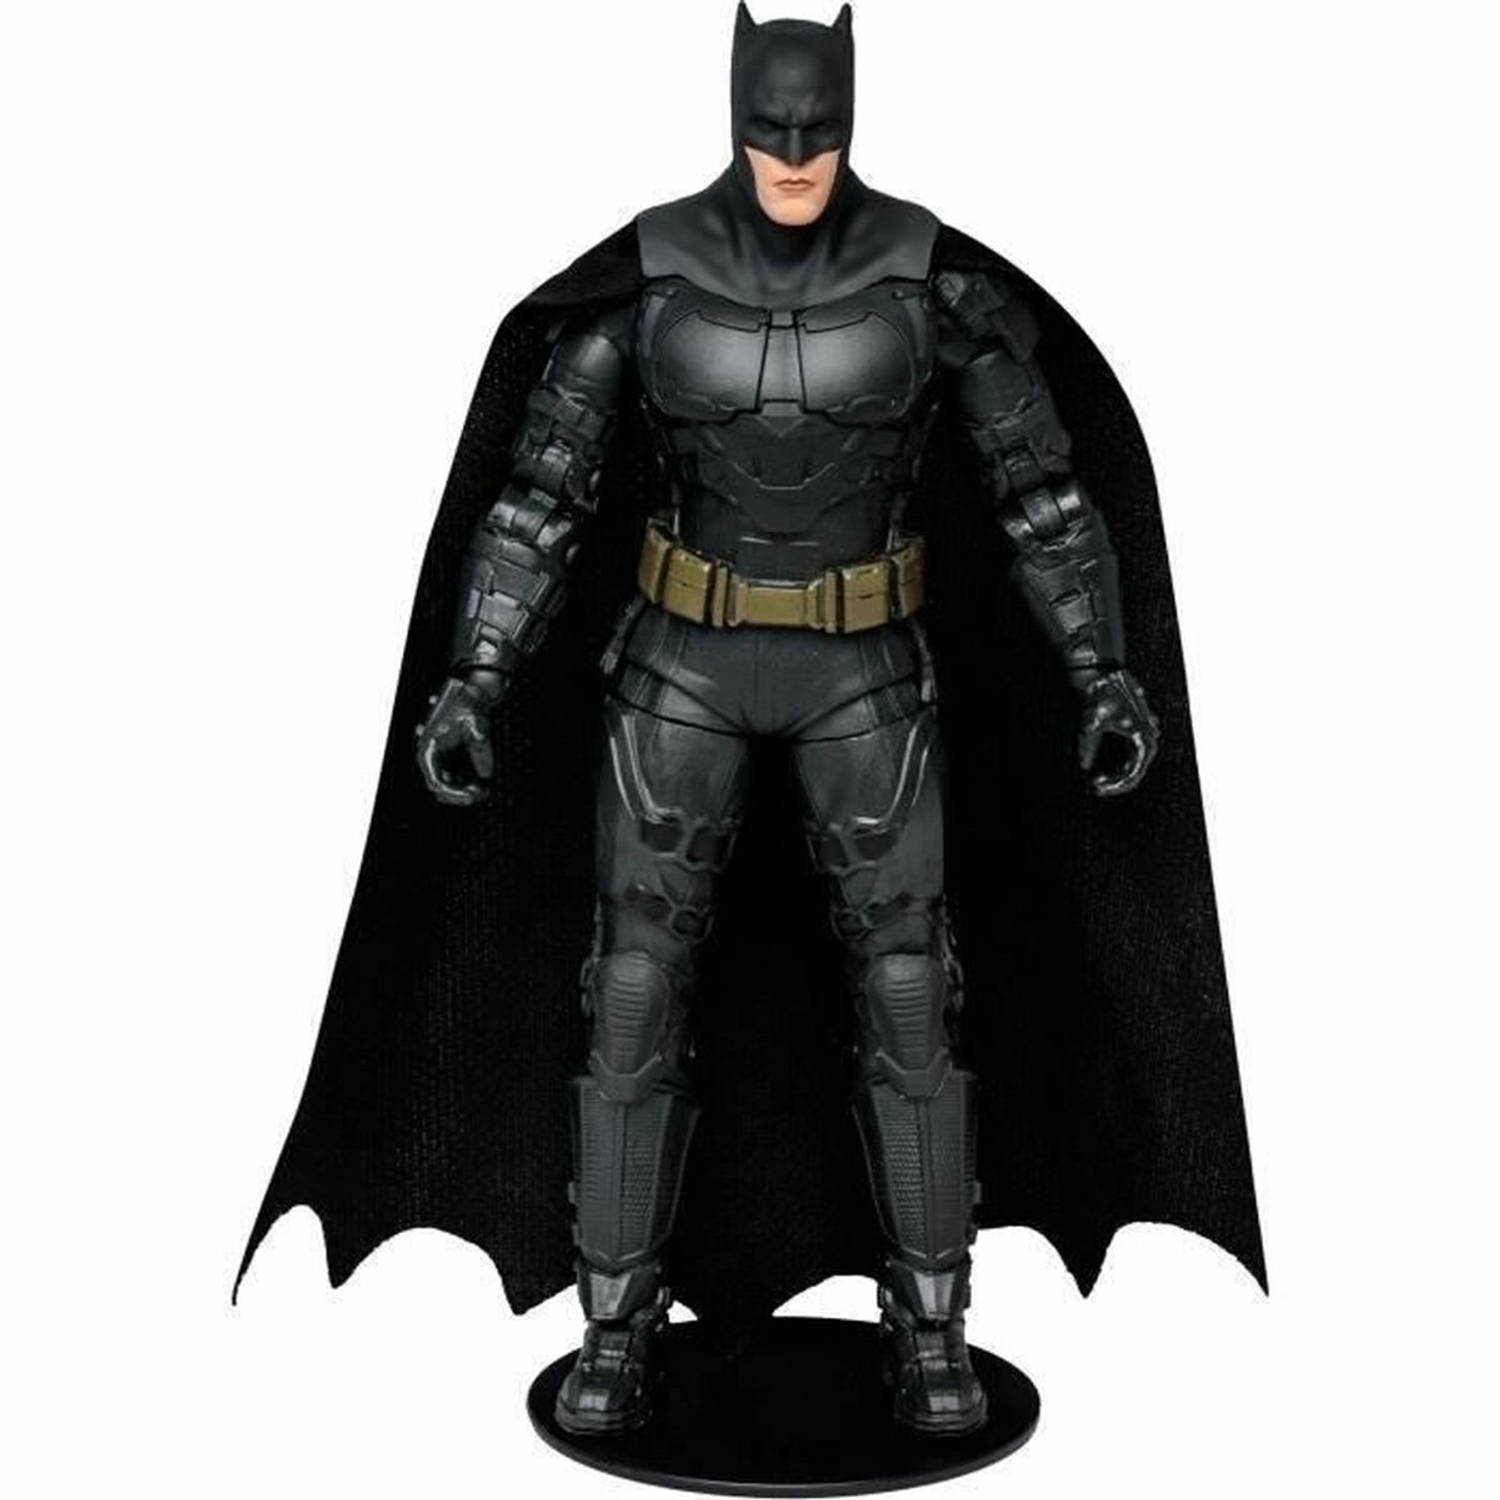 Actiefiguren The Flash Batman (Michael Keaton) 18 cm